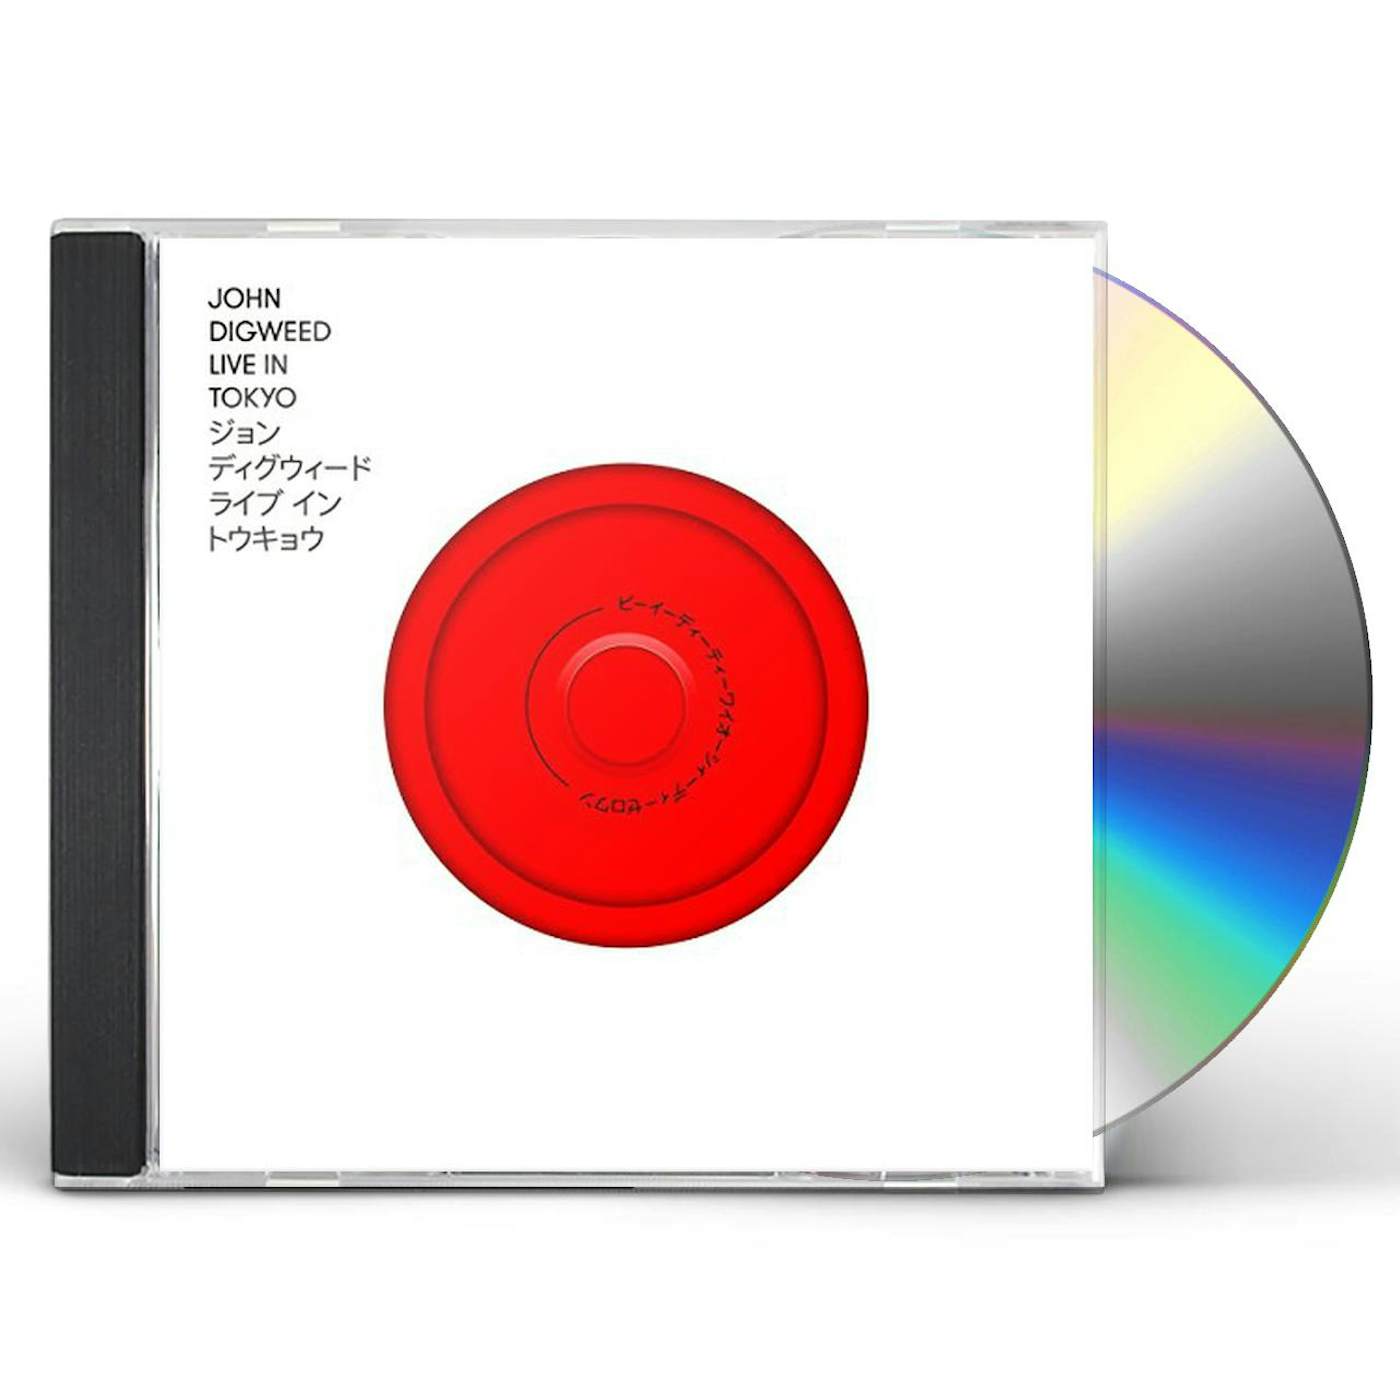 JOHN DIGWEED LIVE IN TOKYO CD